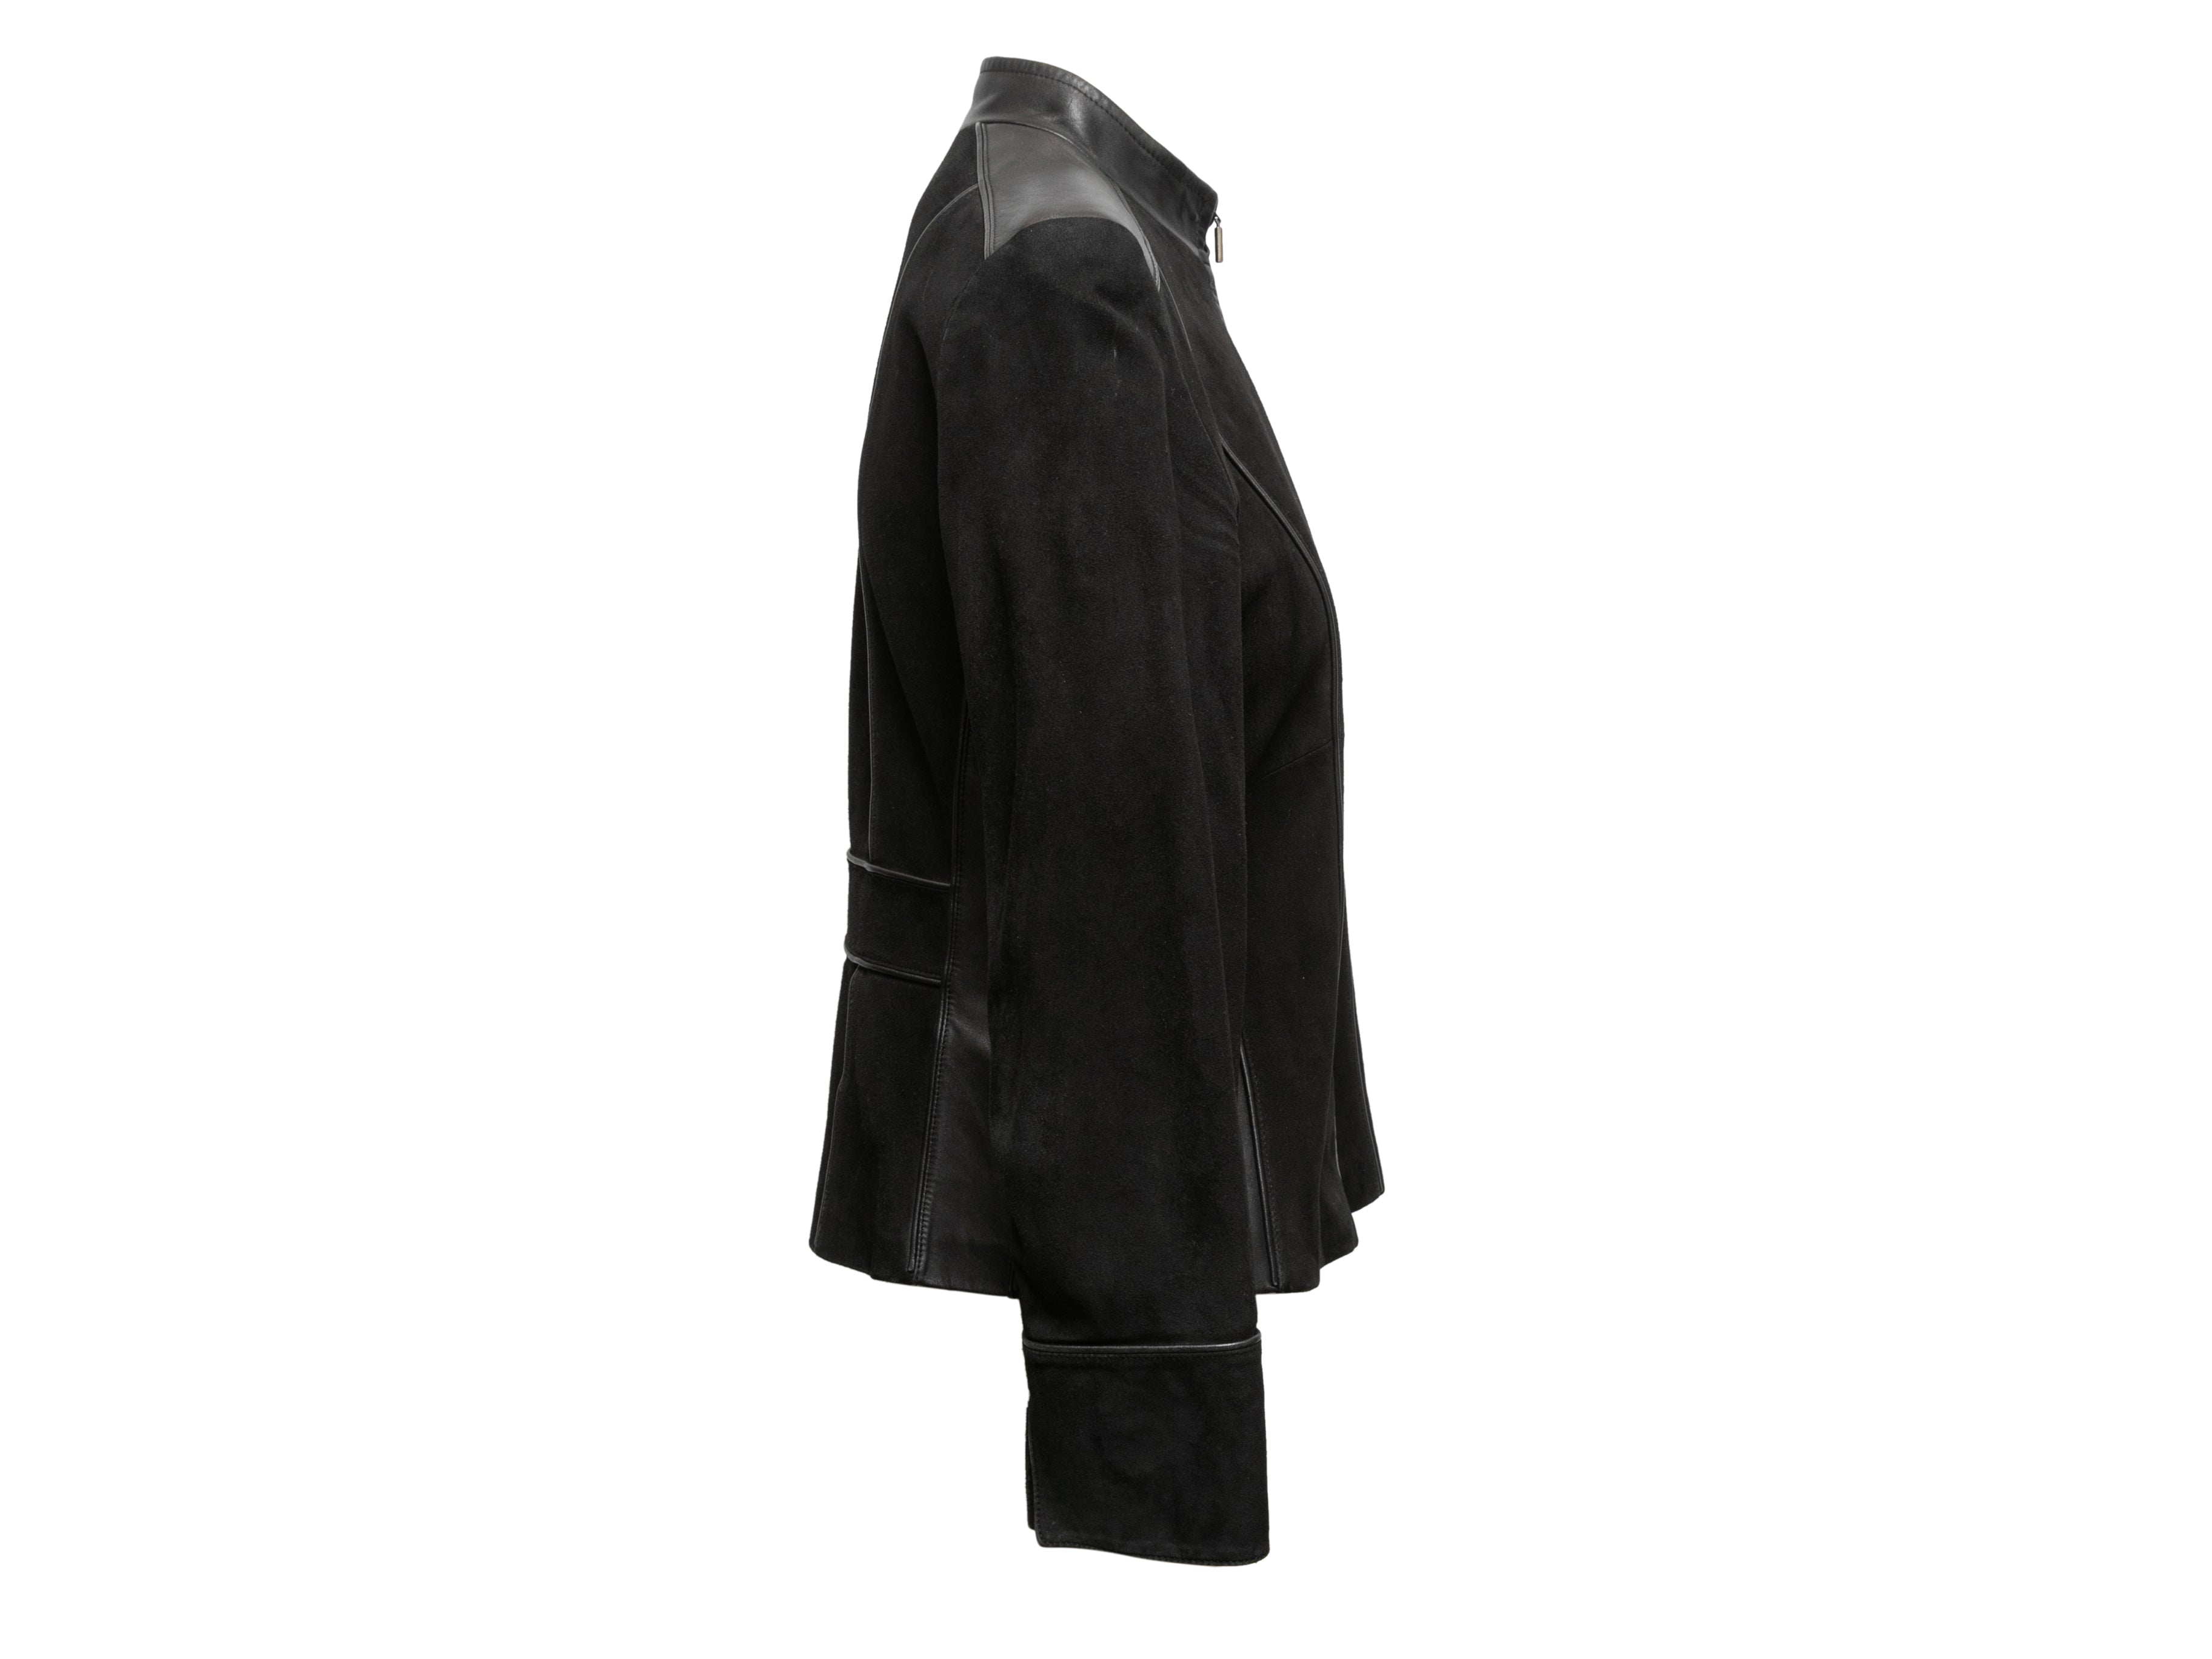 Black Suede & Leather Zip Jacket Size US 8